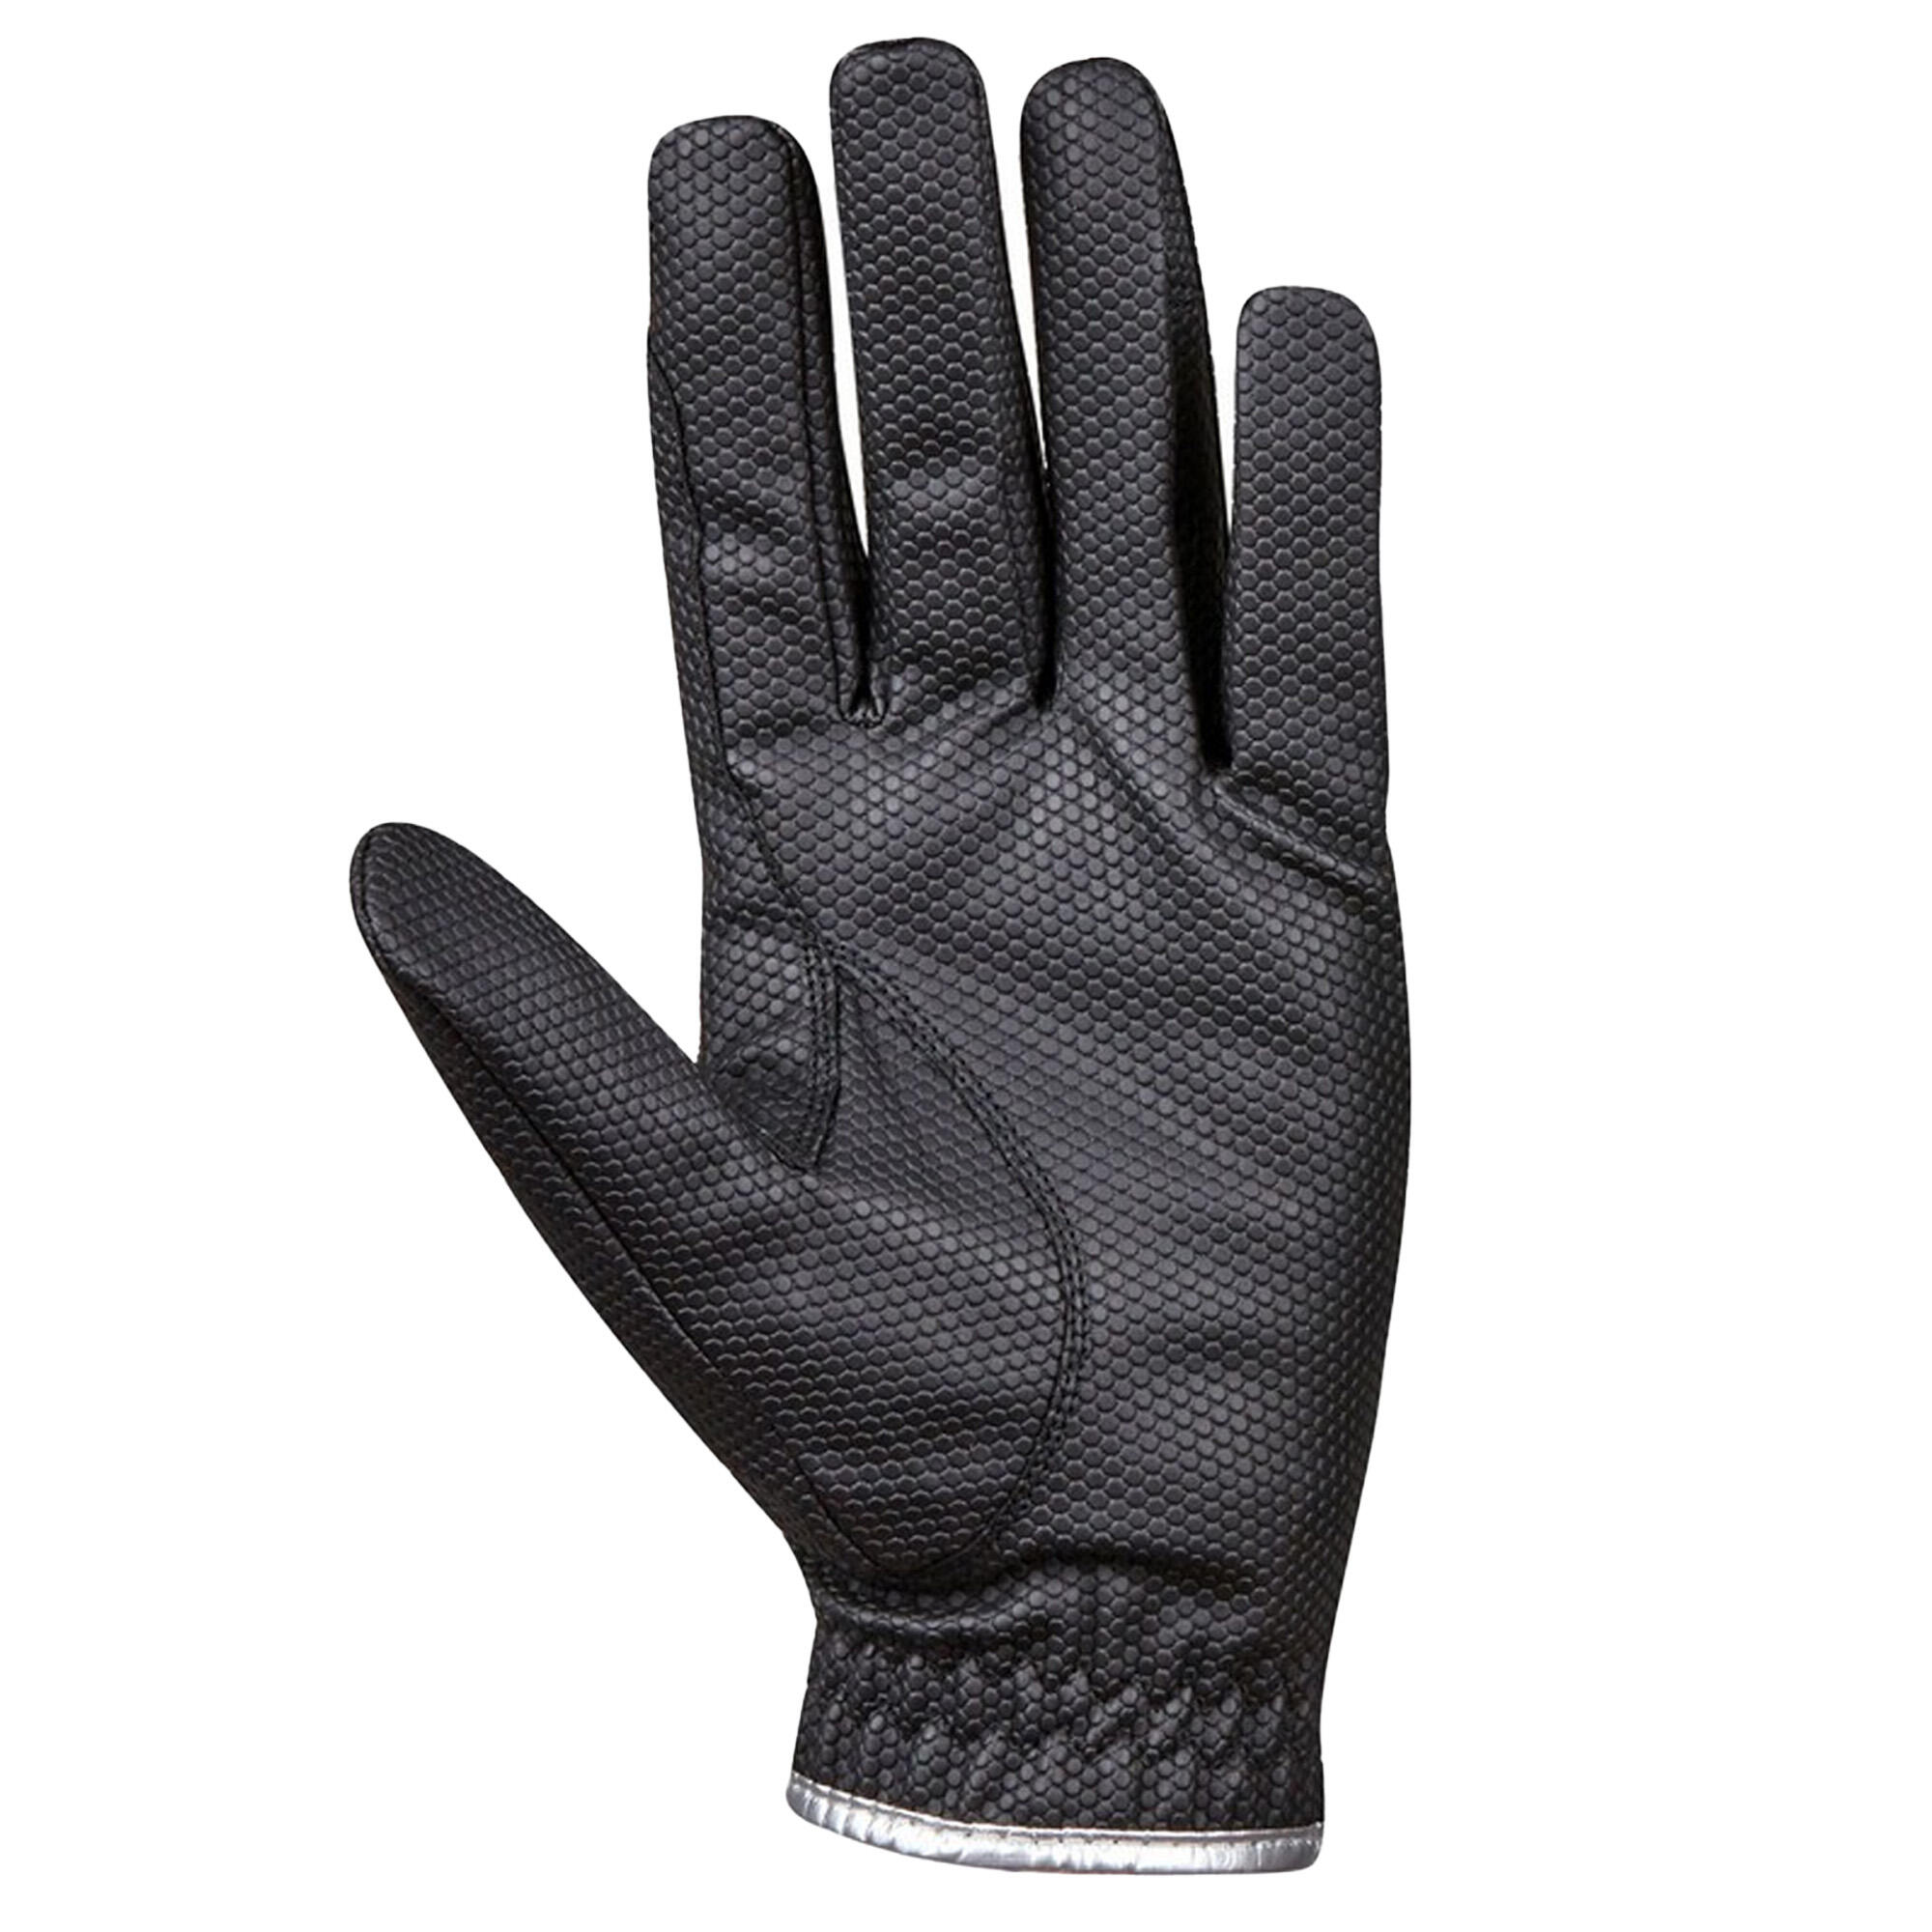 Pro Everyday Riding Gloves (Black/Silver) 2/3